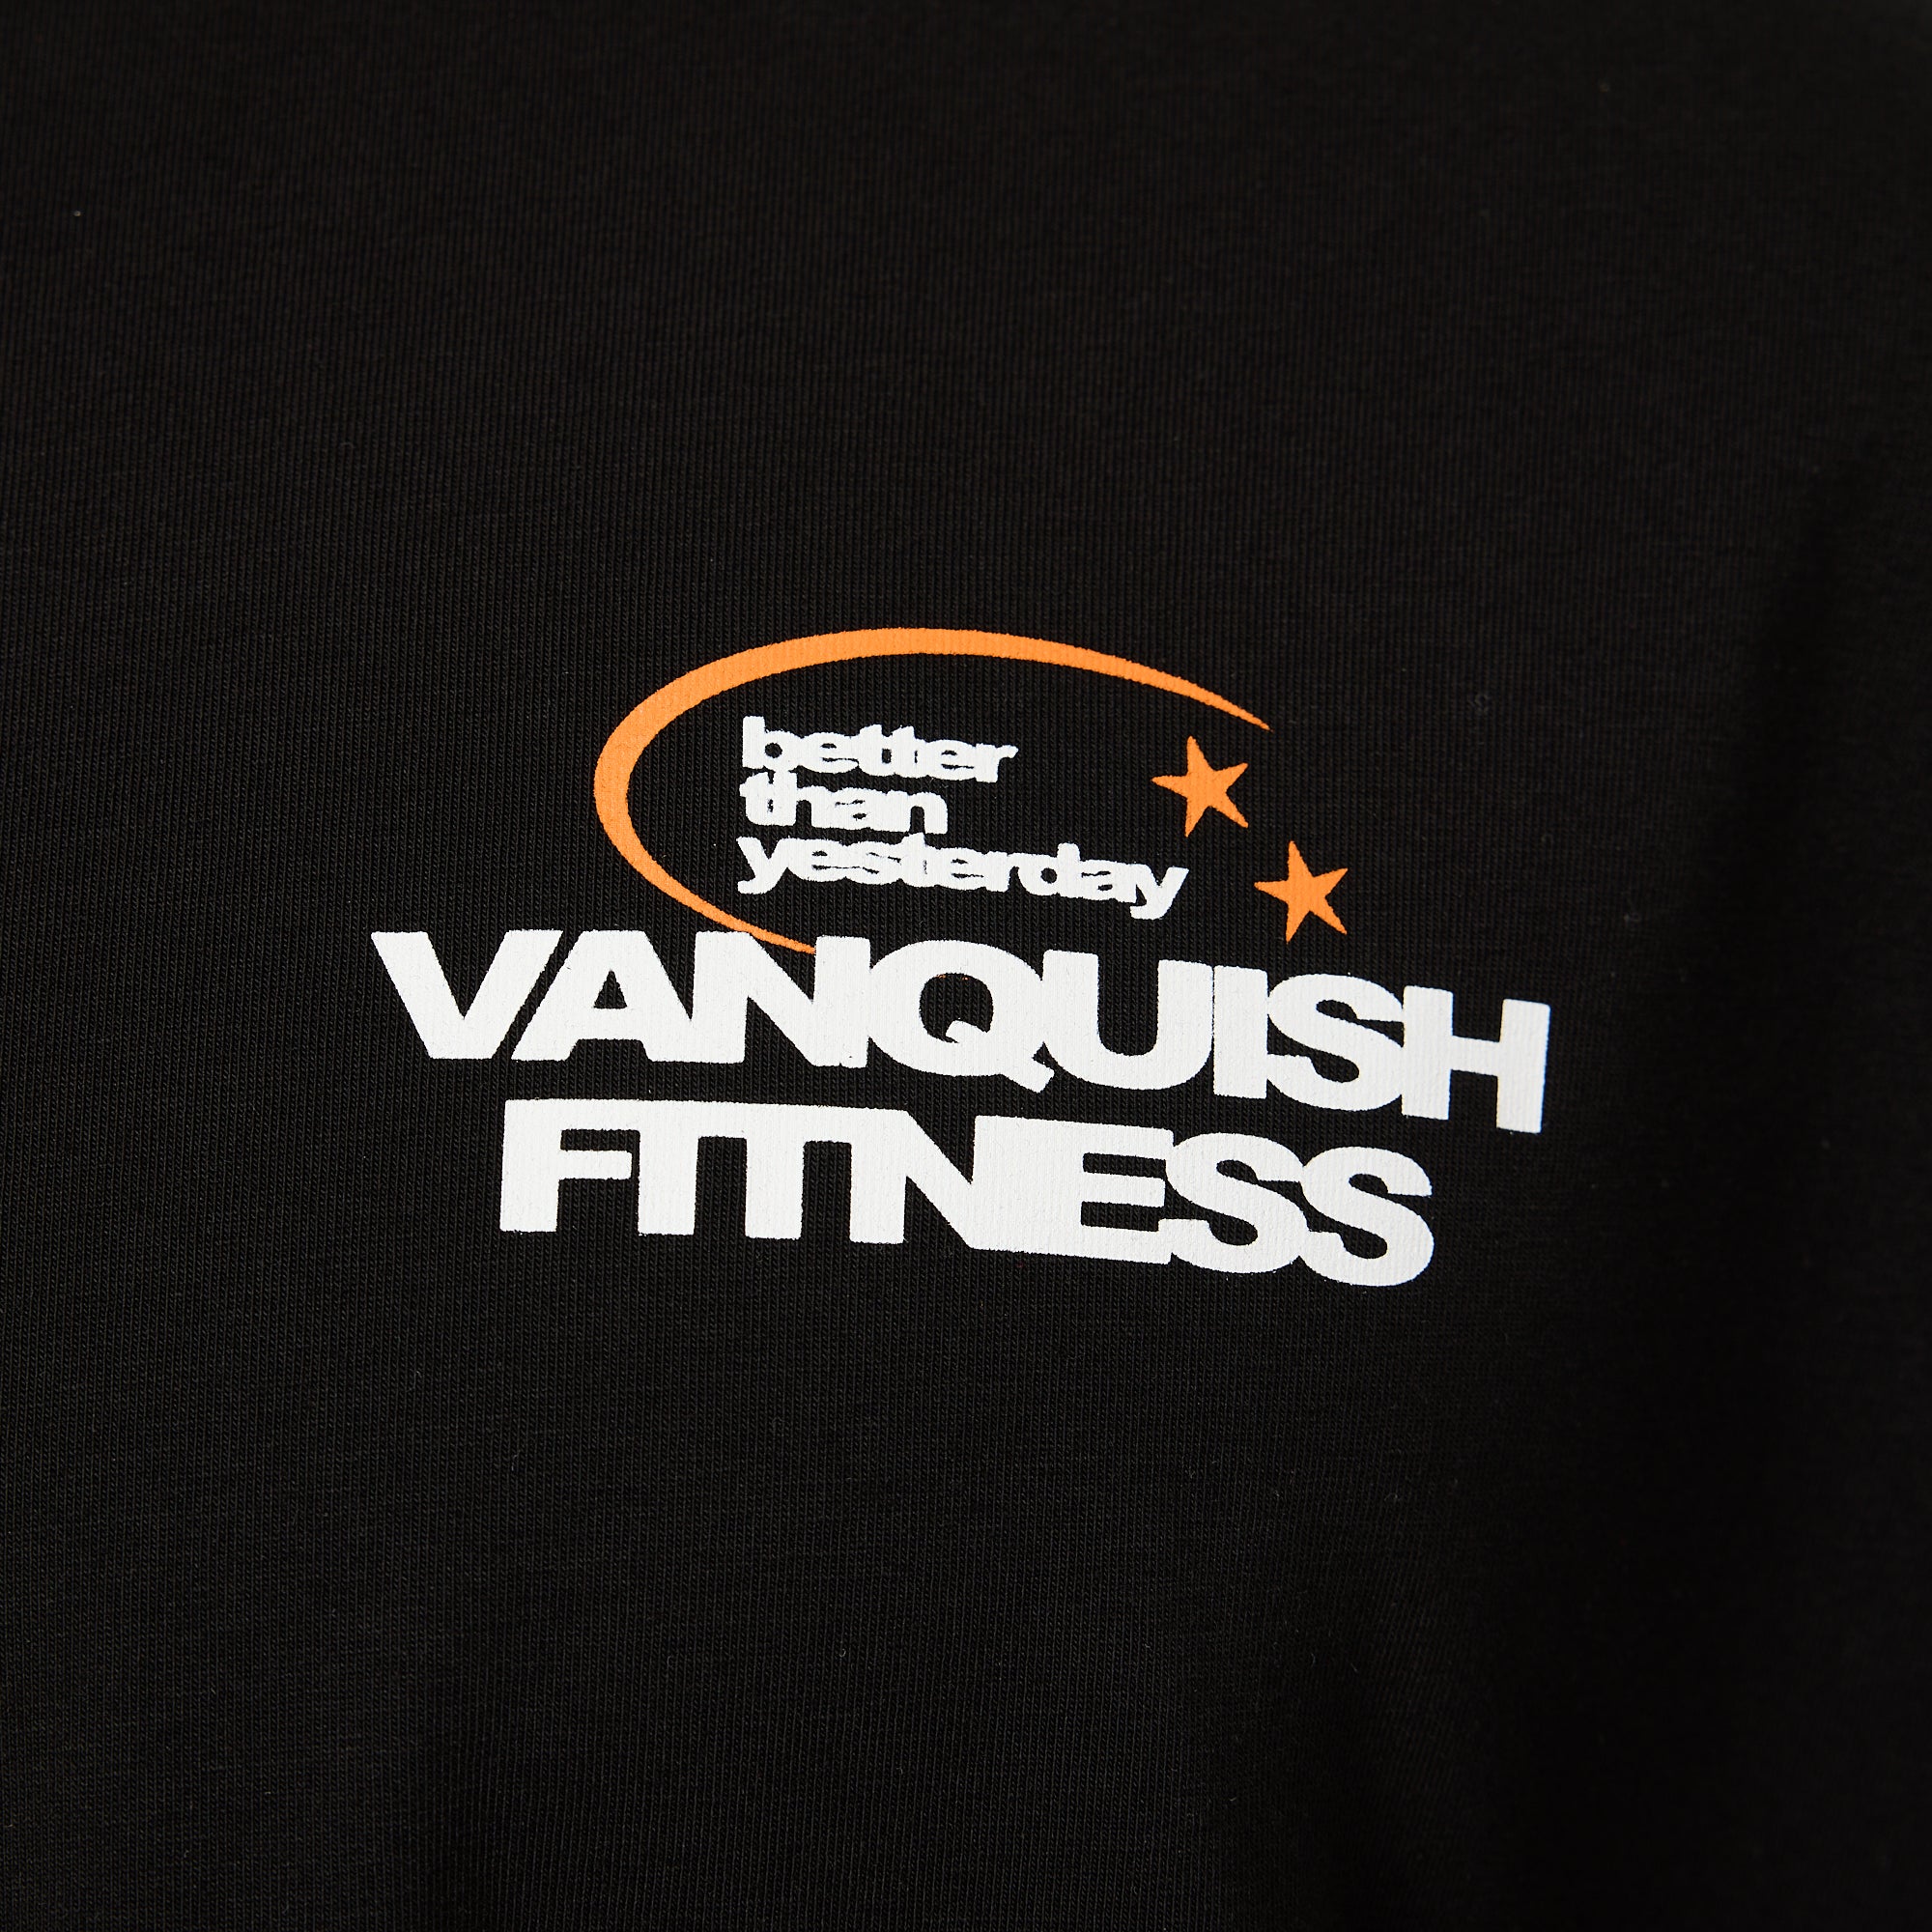 Vanquish TSP Since 2015 Black Oversized T Shirt